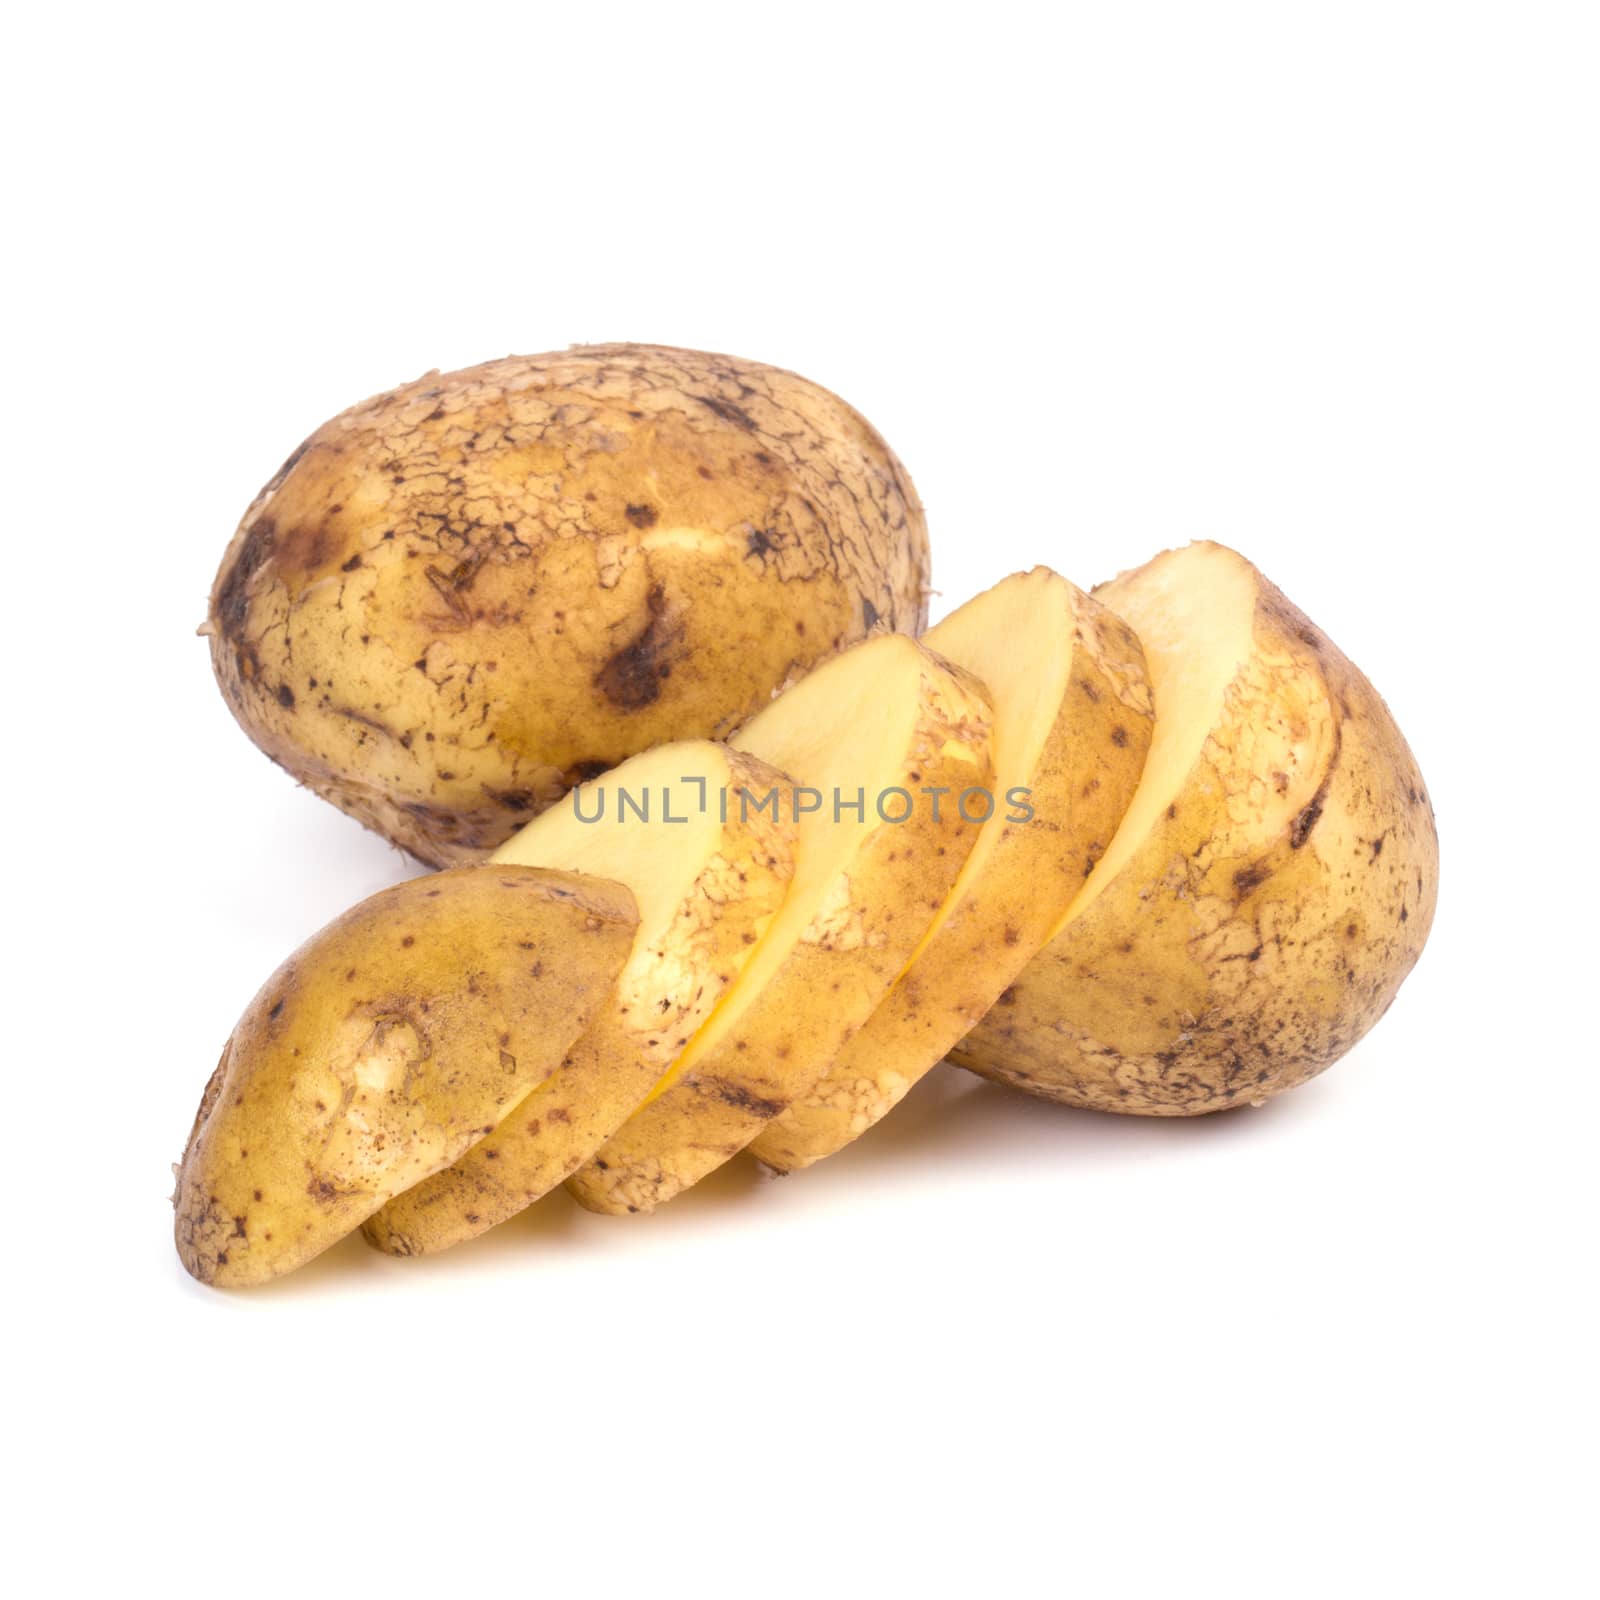 Potato on the table by rufatjumali